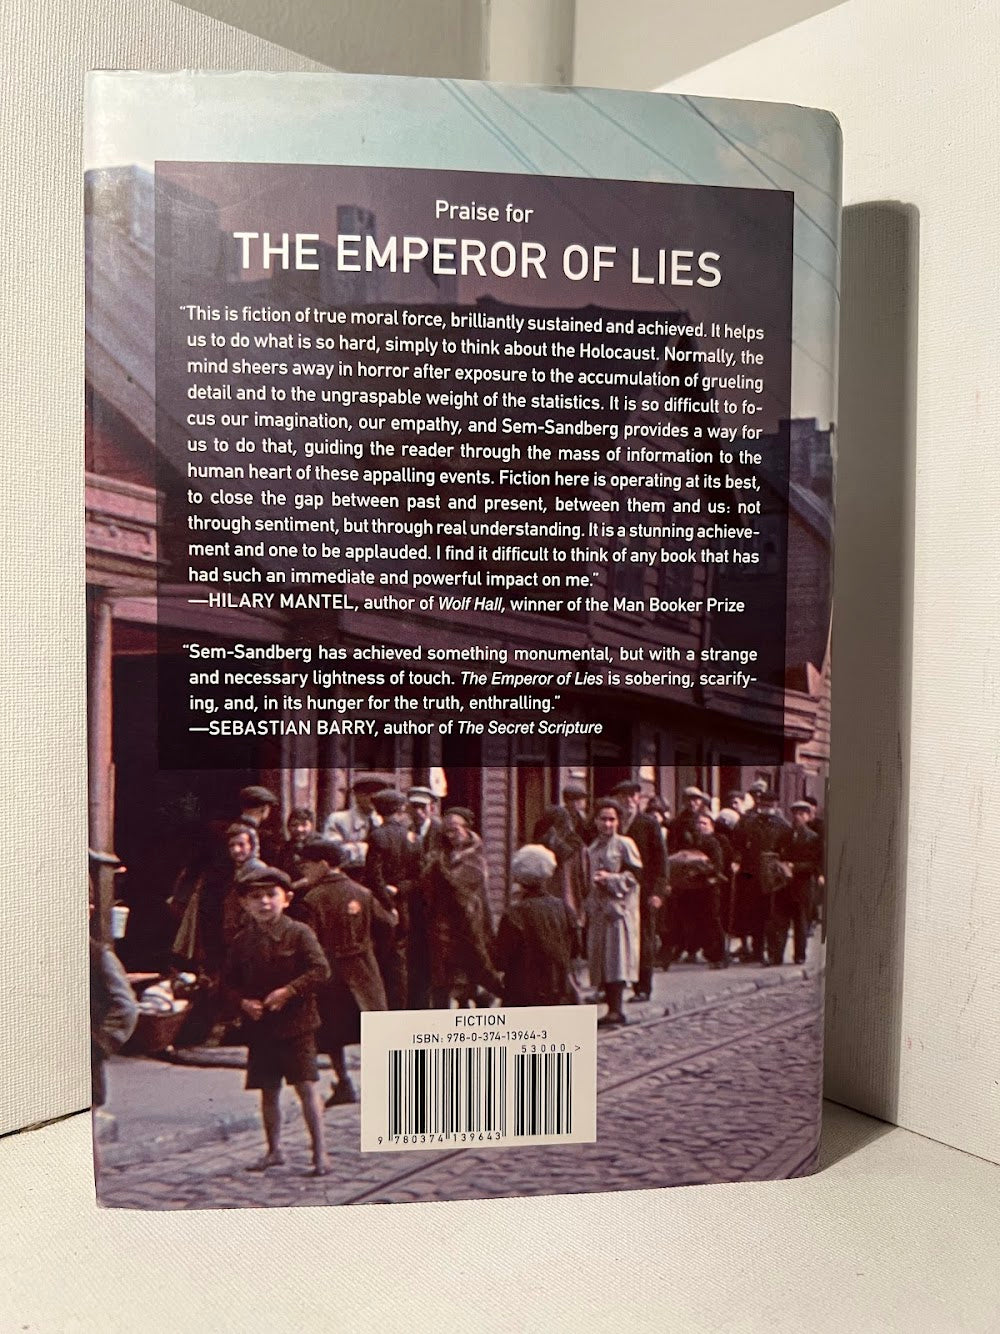 The Emperor of Lies by Steve Sem-Sandberg